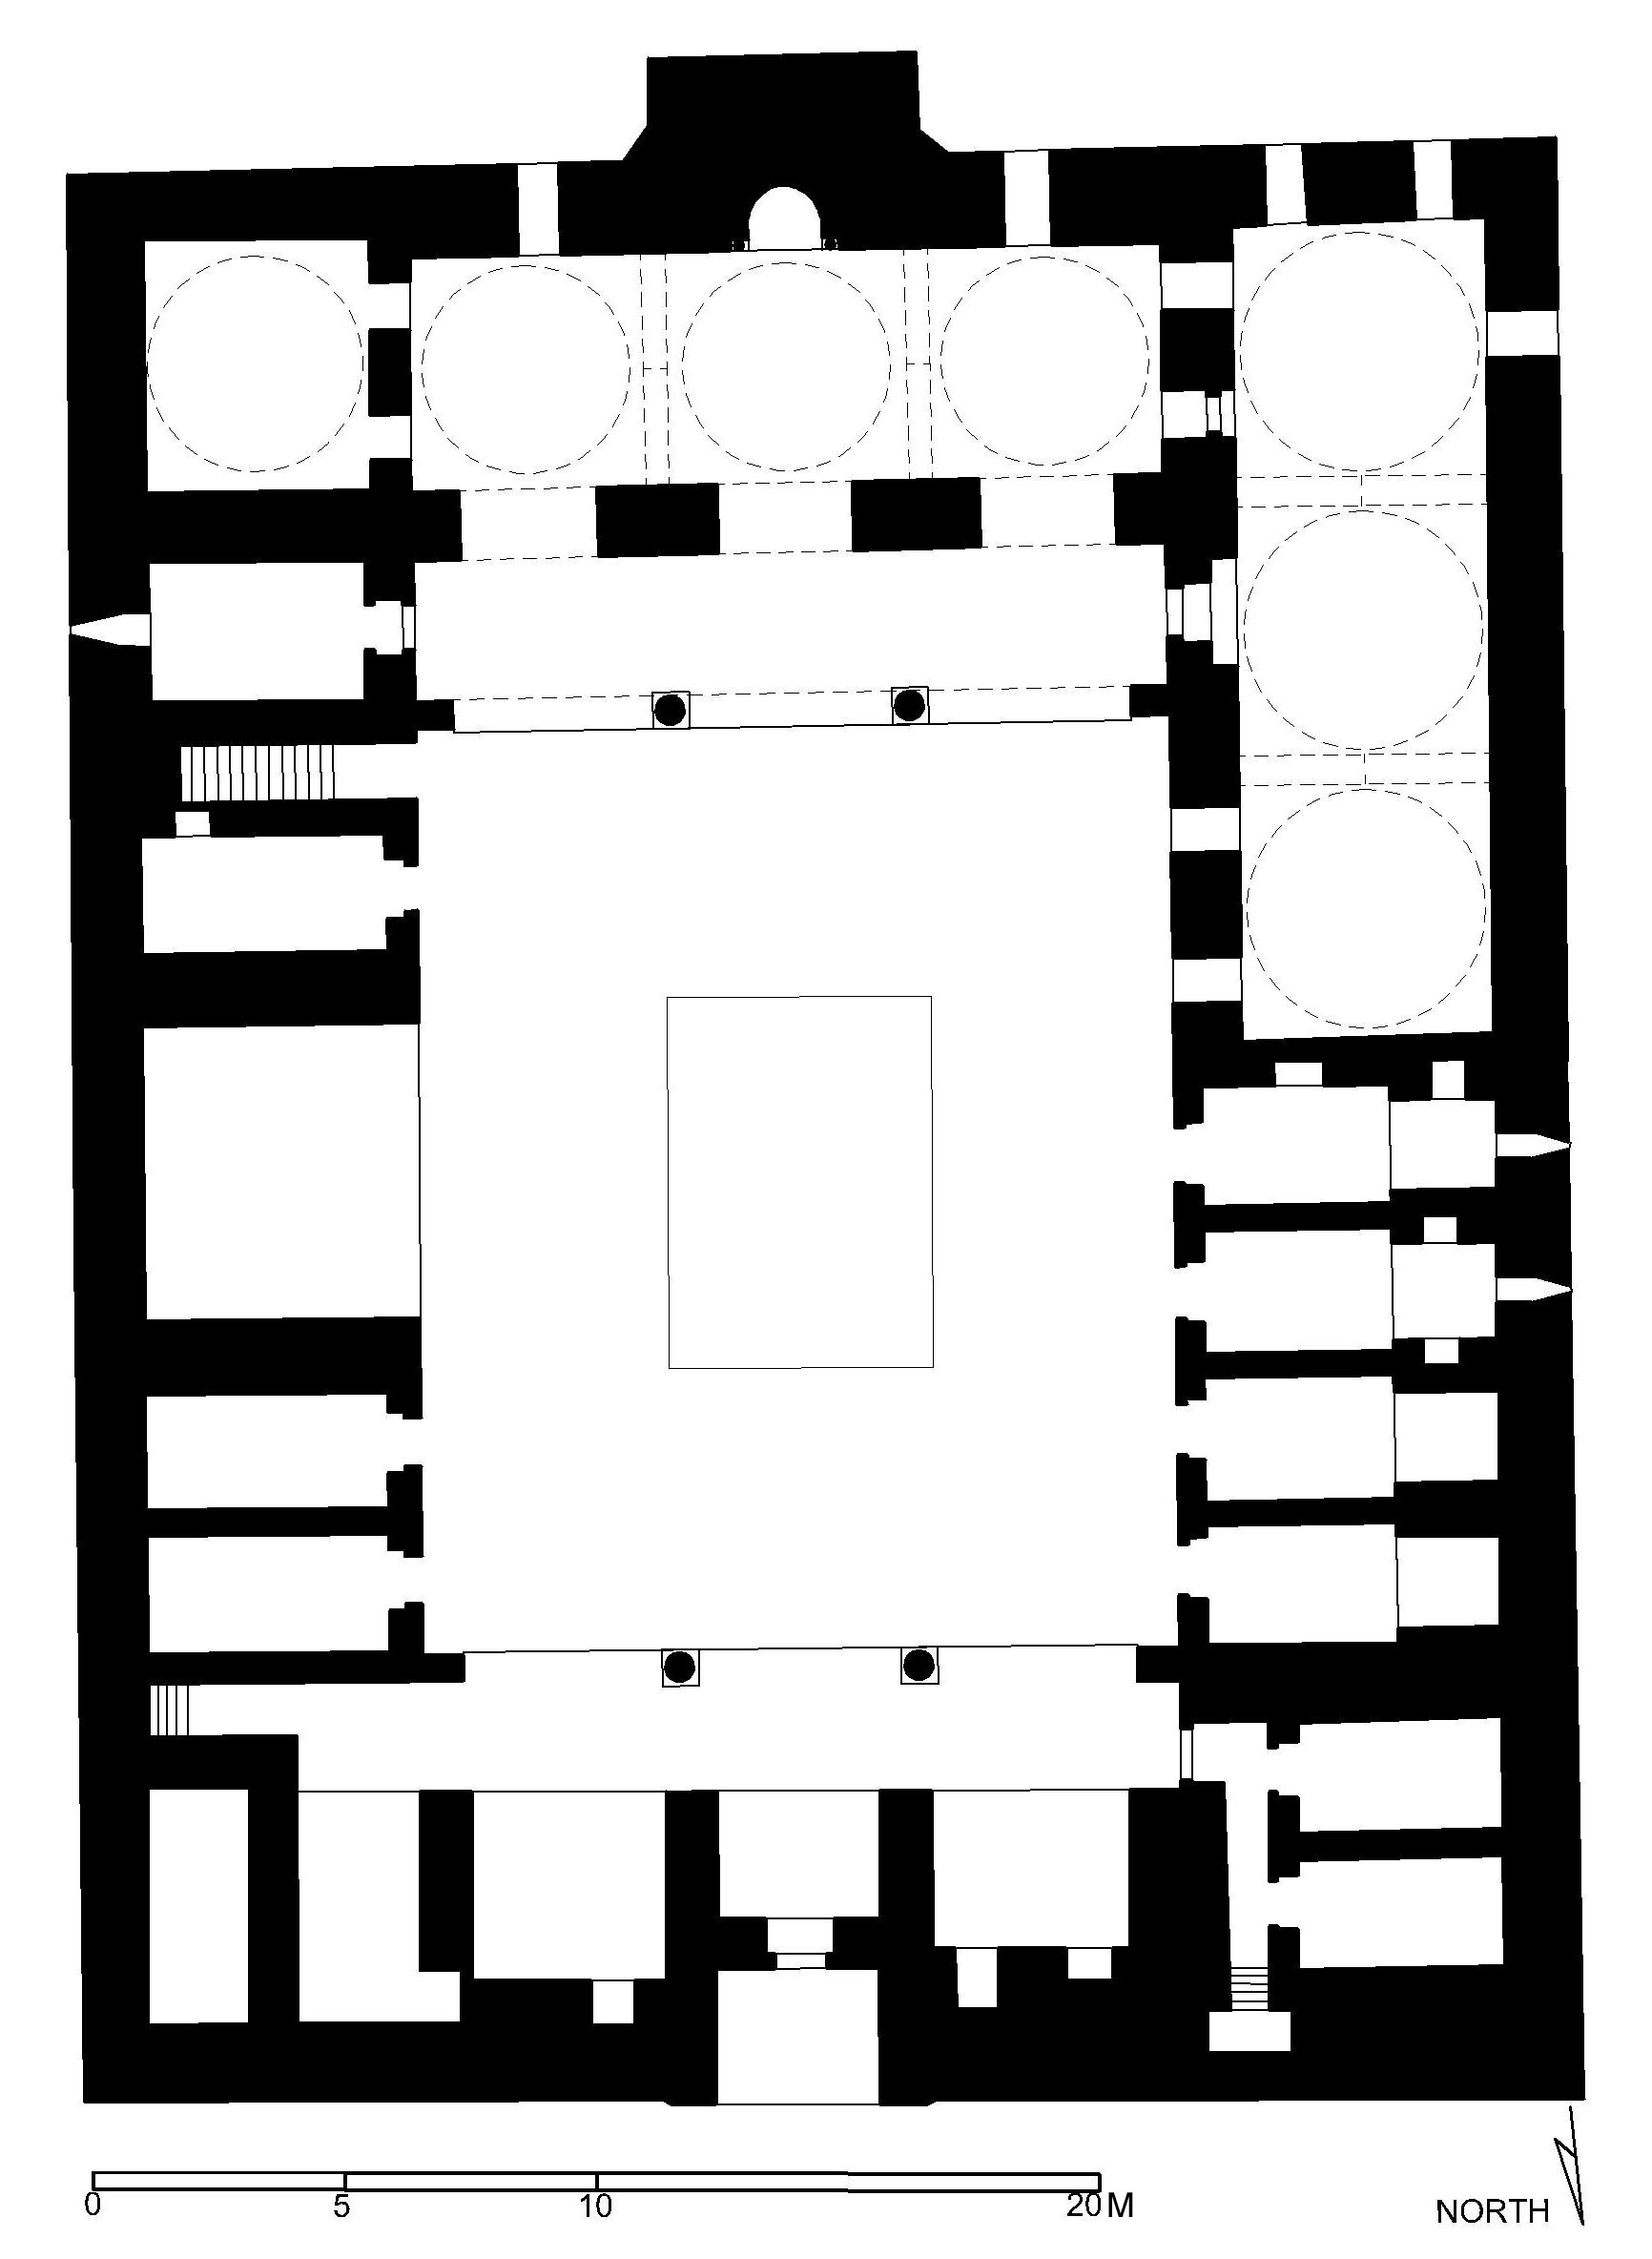 Floor plan of madrasa (after Meinecke)